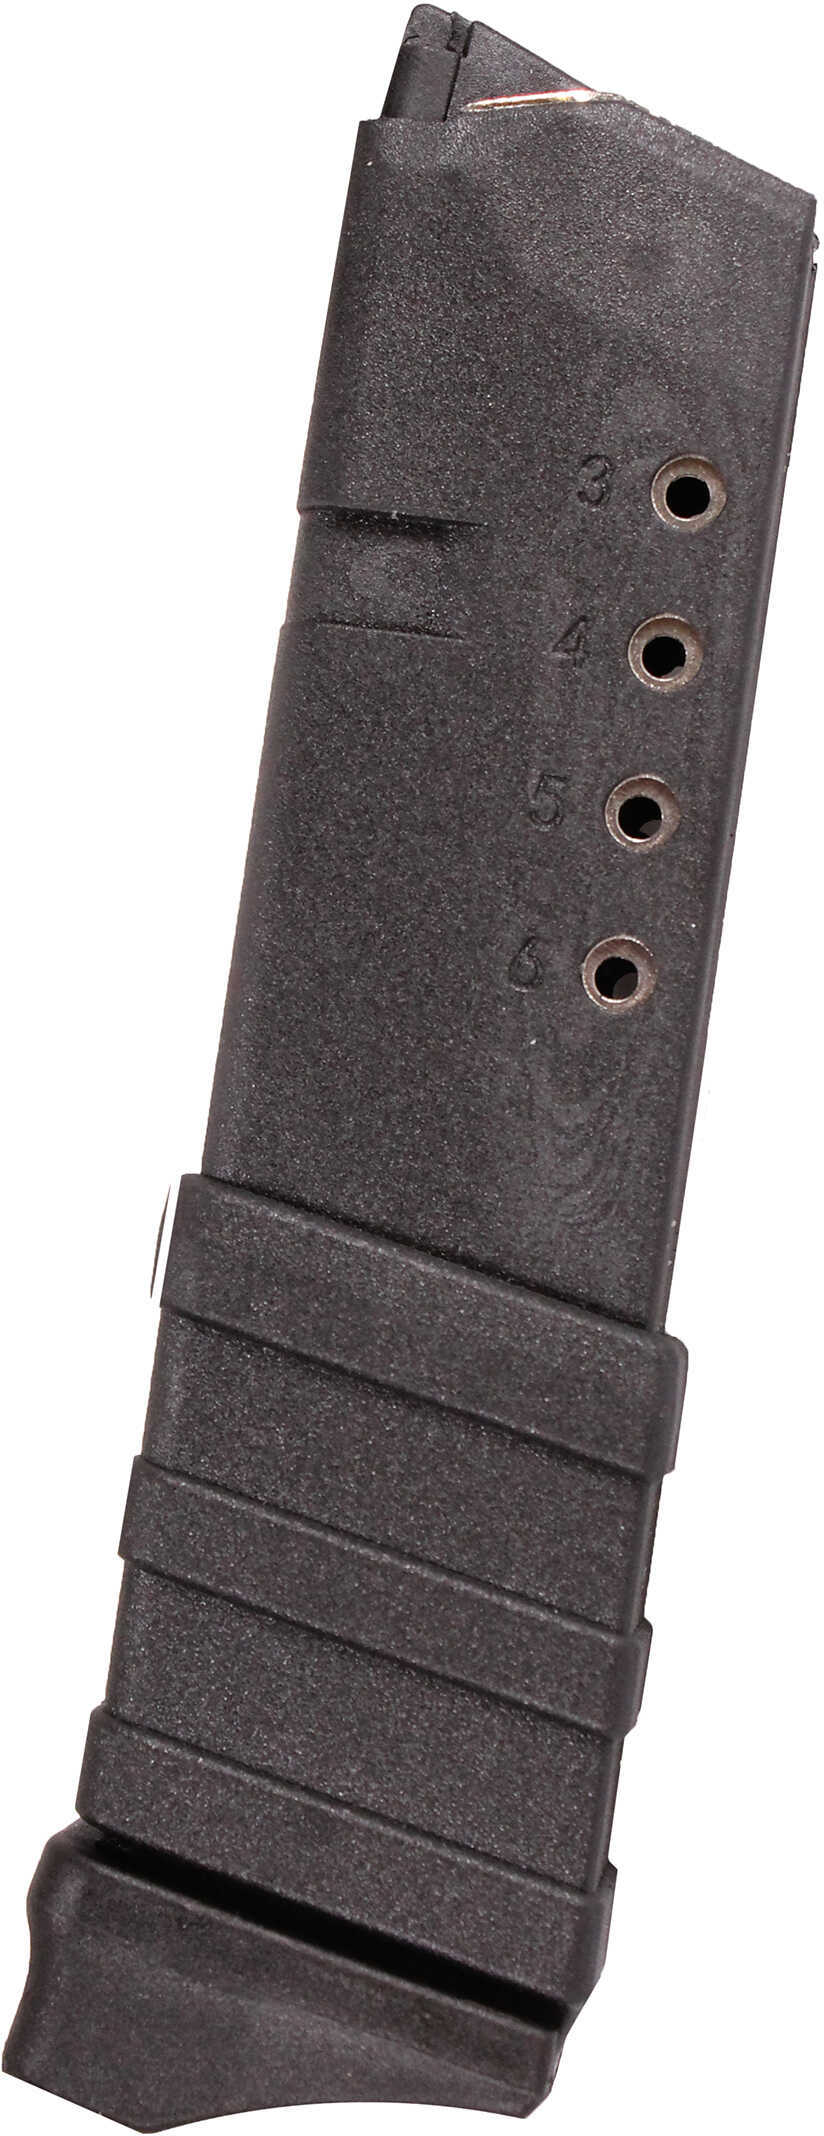 ProMag for Glock Magazine Model 43, 9mm, 10 Rounds, Black Polymer